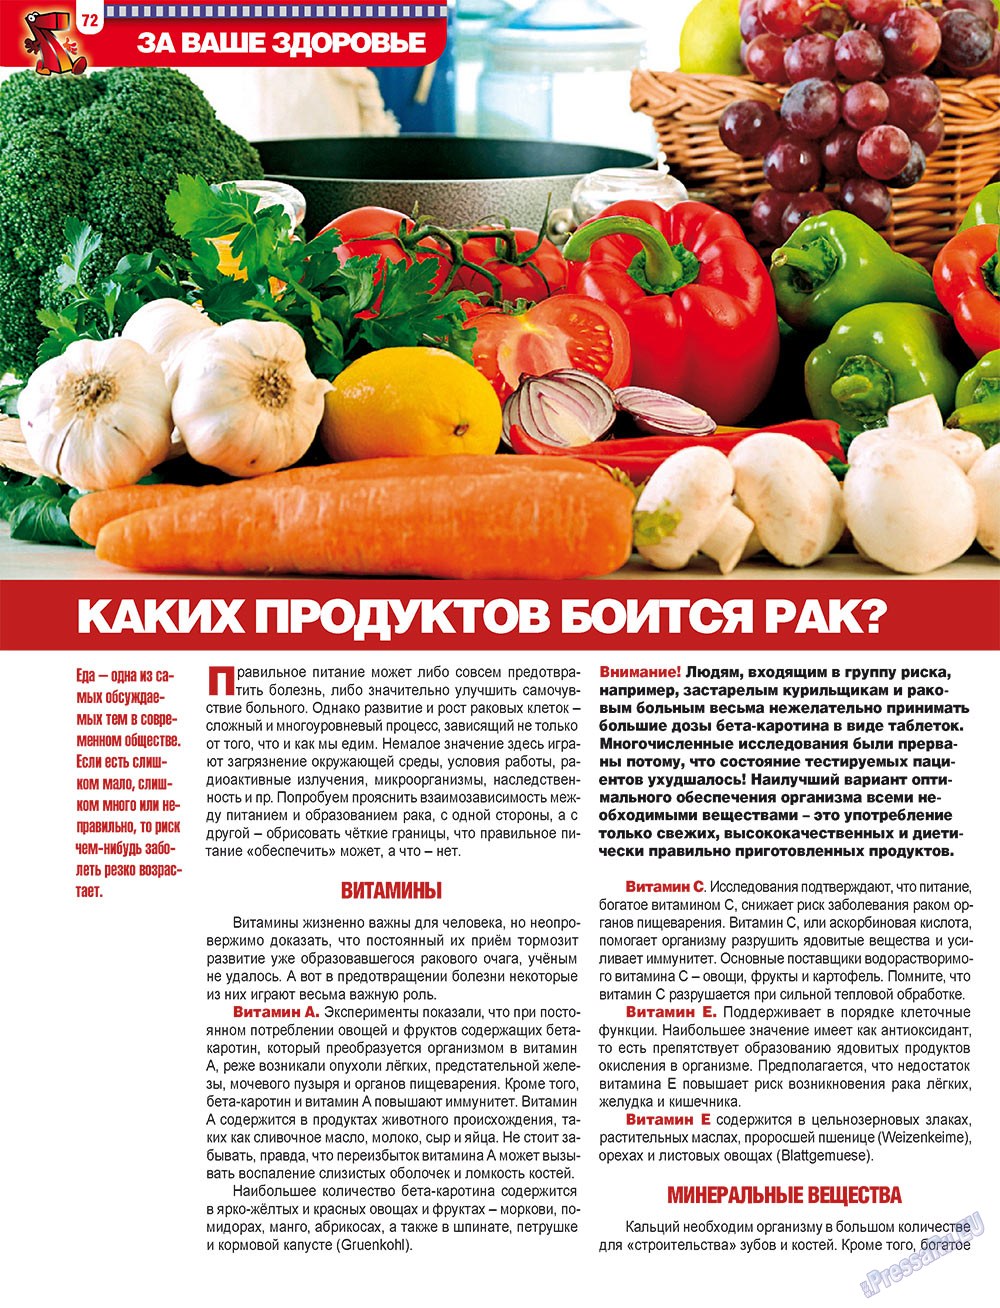 7плюс7я (журнал). 2011 год, номер 21, стр. 72